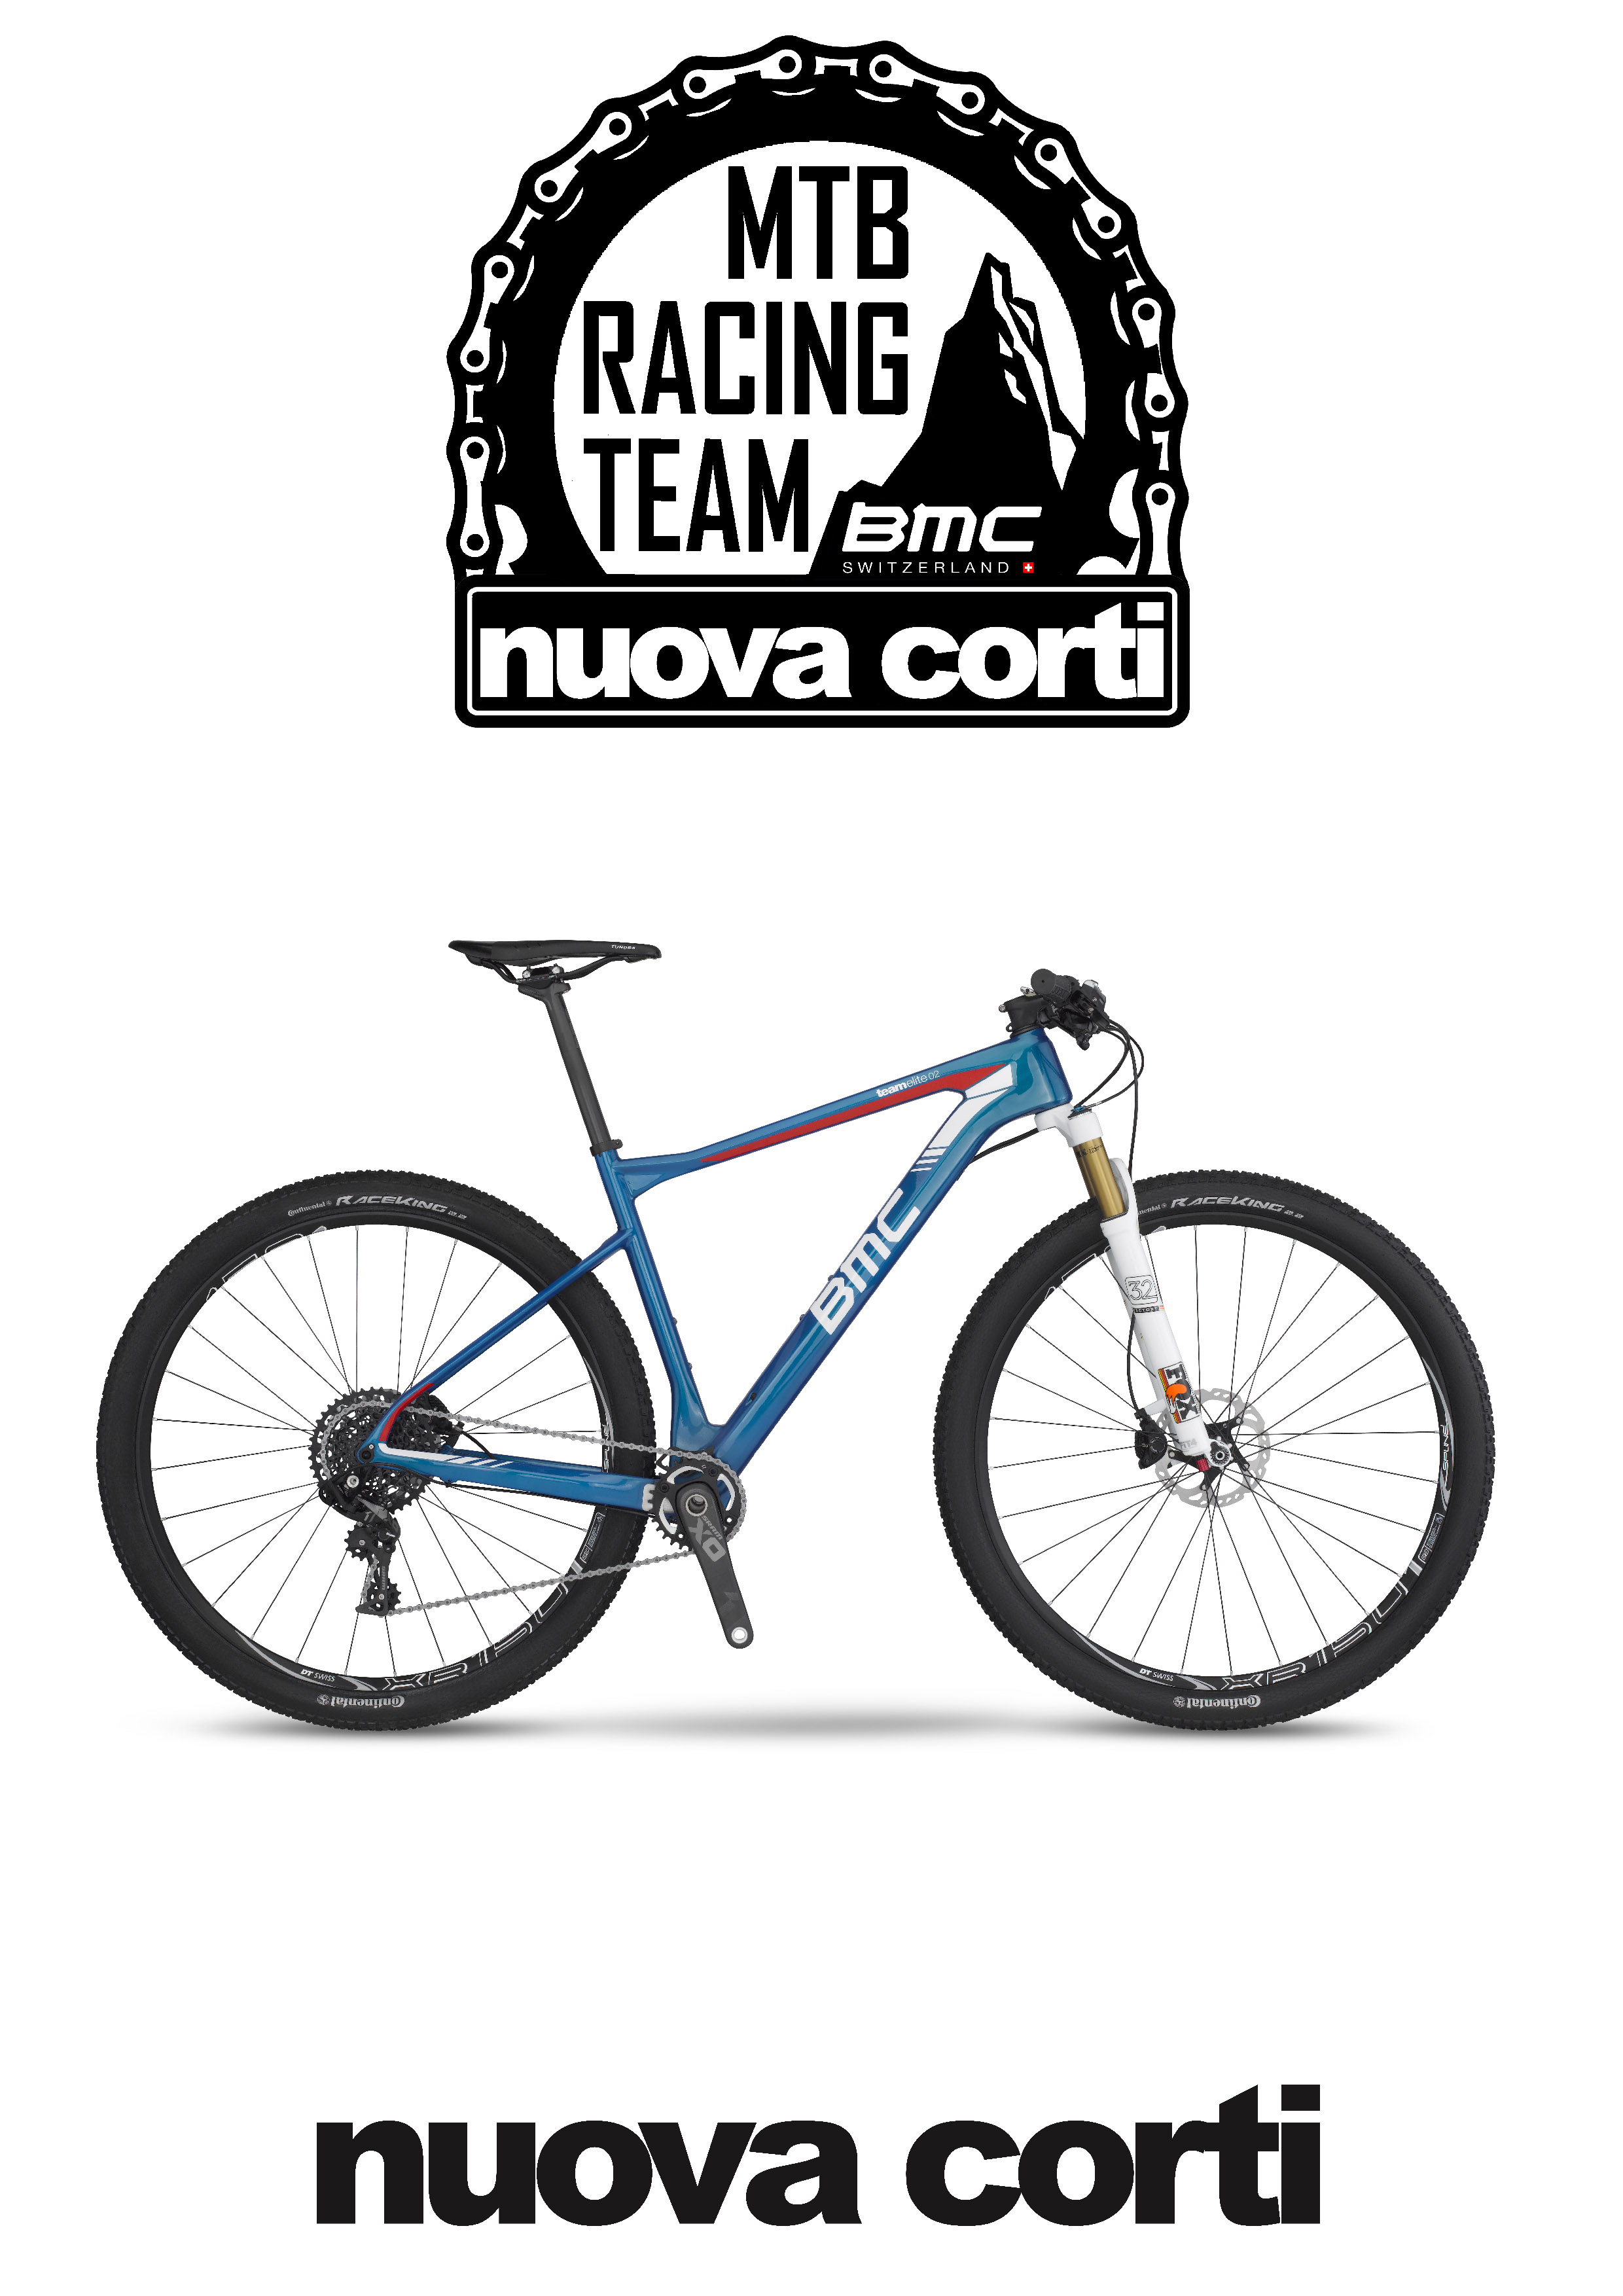 Mountaint Bike, MTB, Racing Team, Bicicletta, BMC, Nuova Corti, Sassuolo